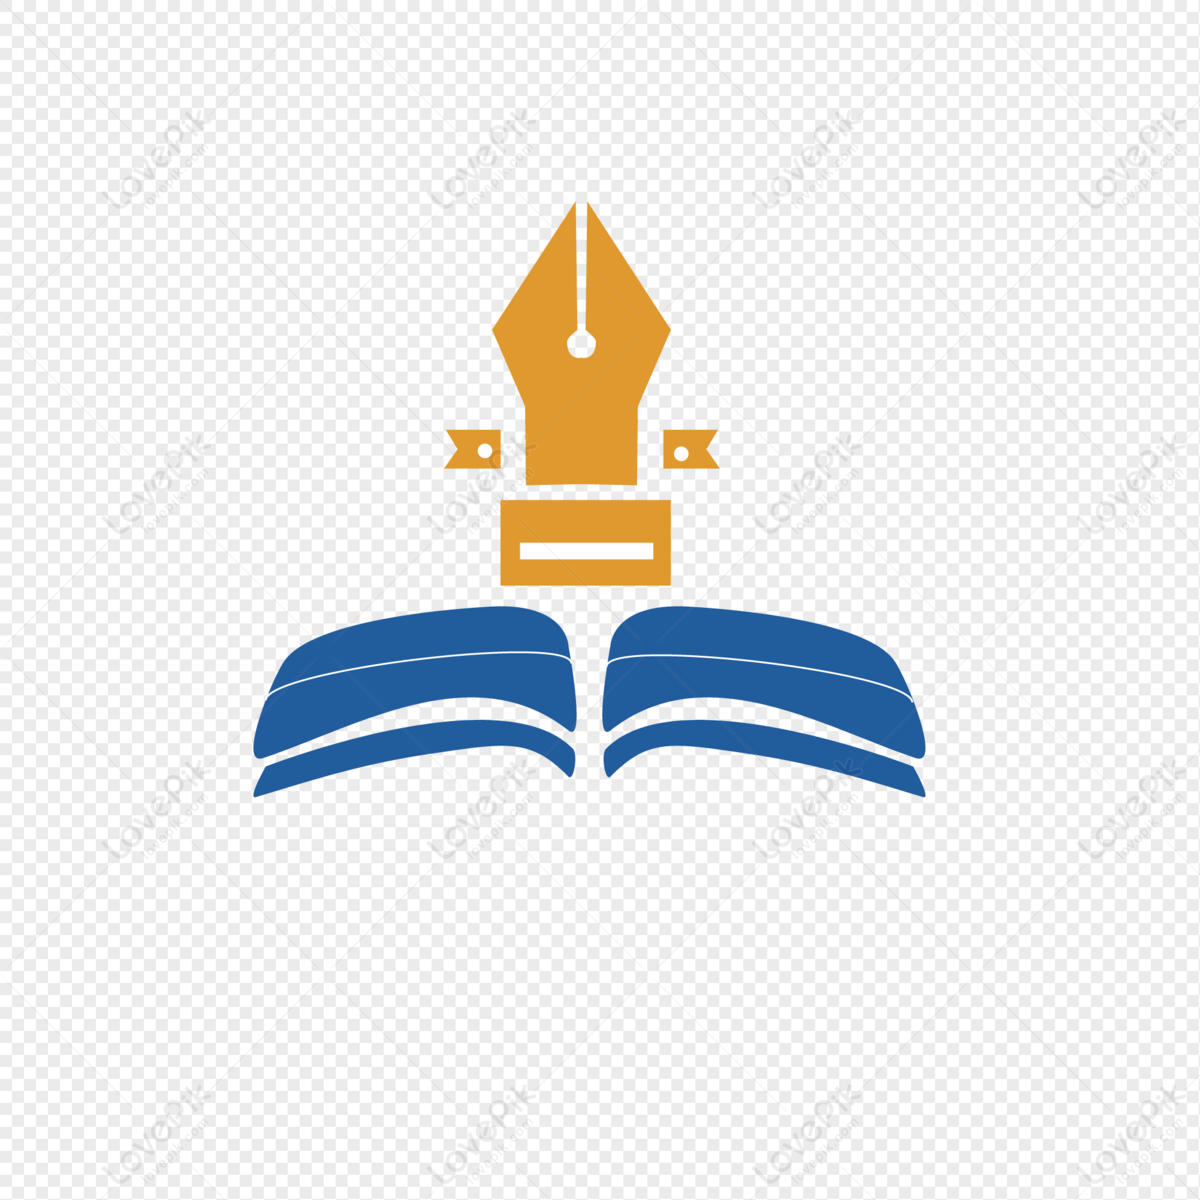 Education logo, muslim education, logo, book icons png hd transparent image